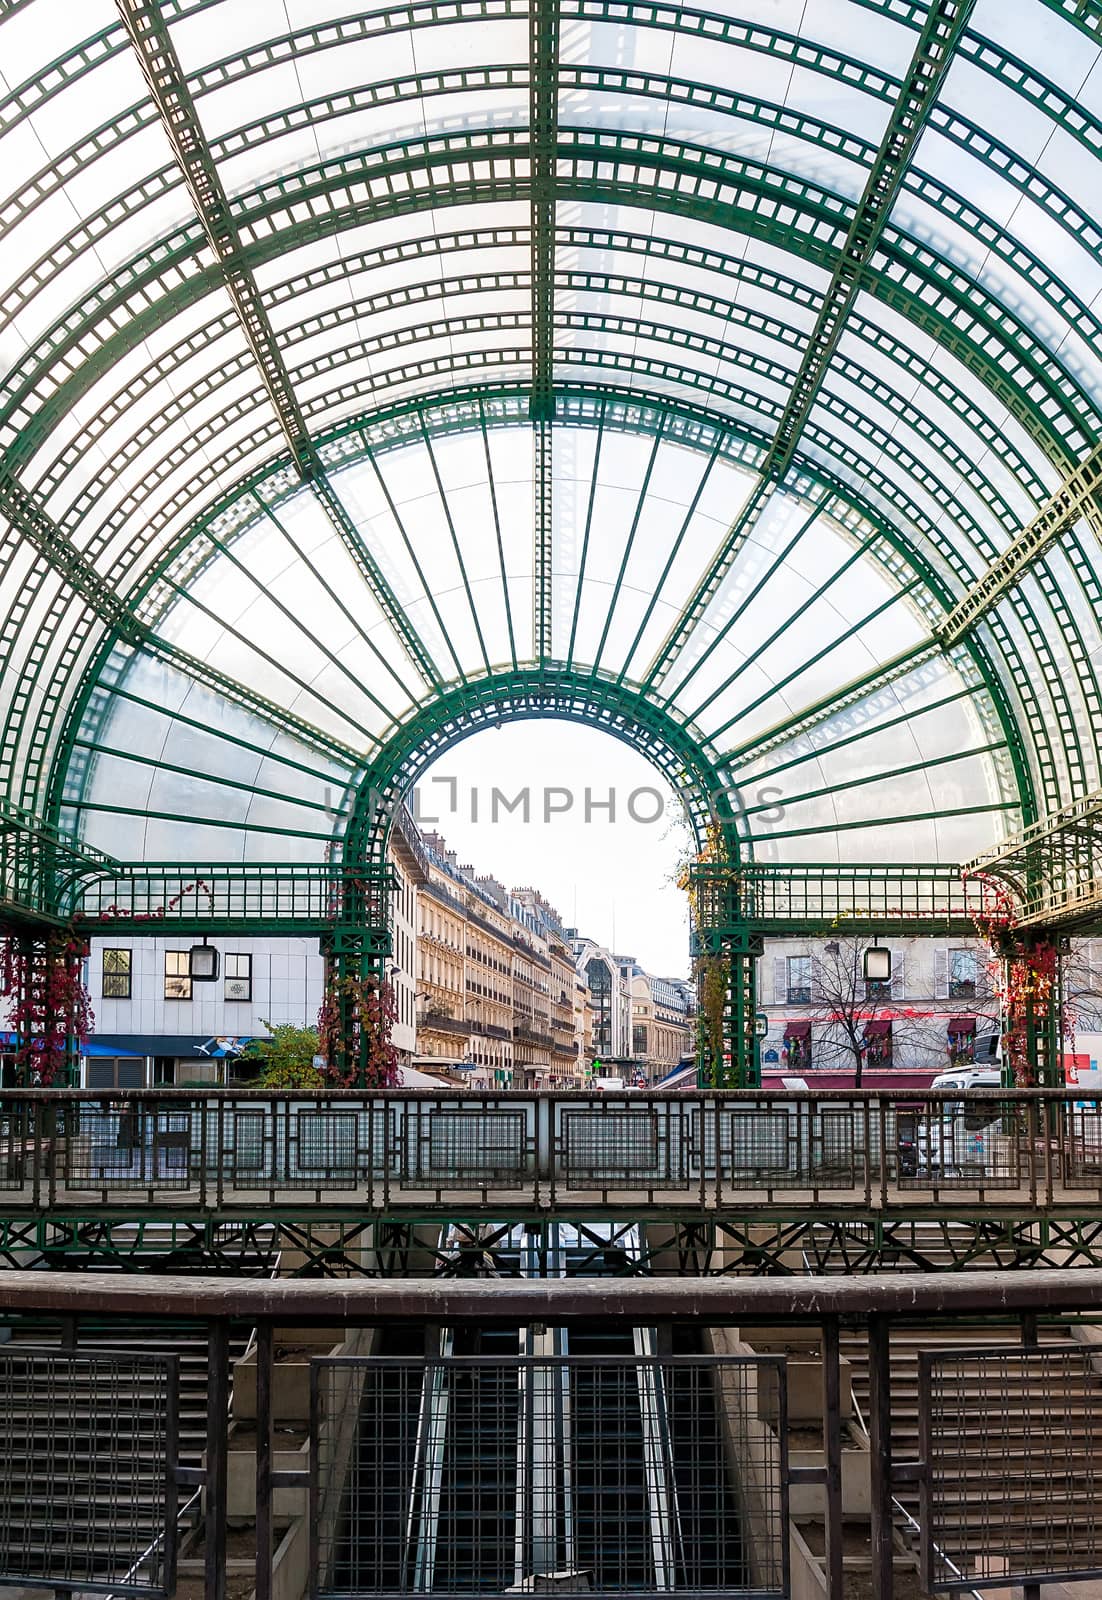 Paris, France, Metro Access "Les Halles". The Rue du Pont Neuf in background